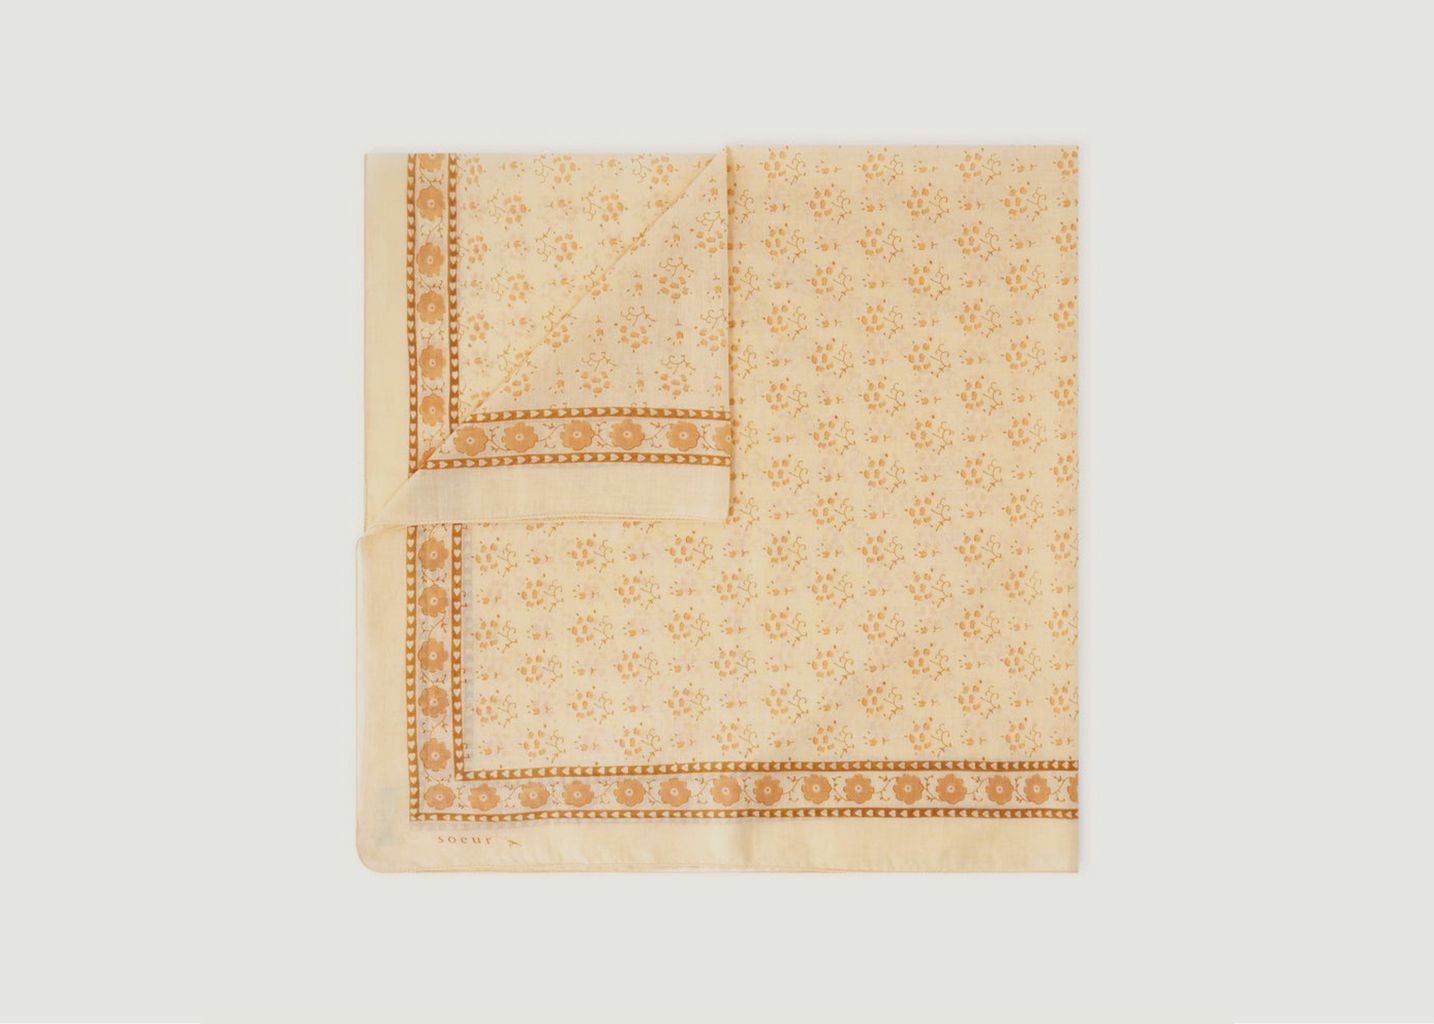 Foulard carré classique motif fleuri - Soeur